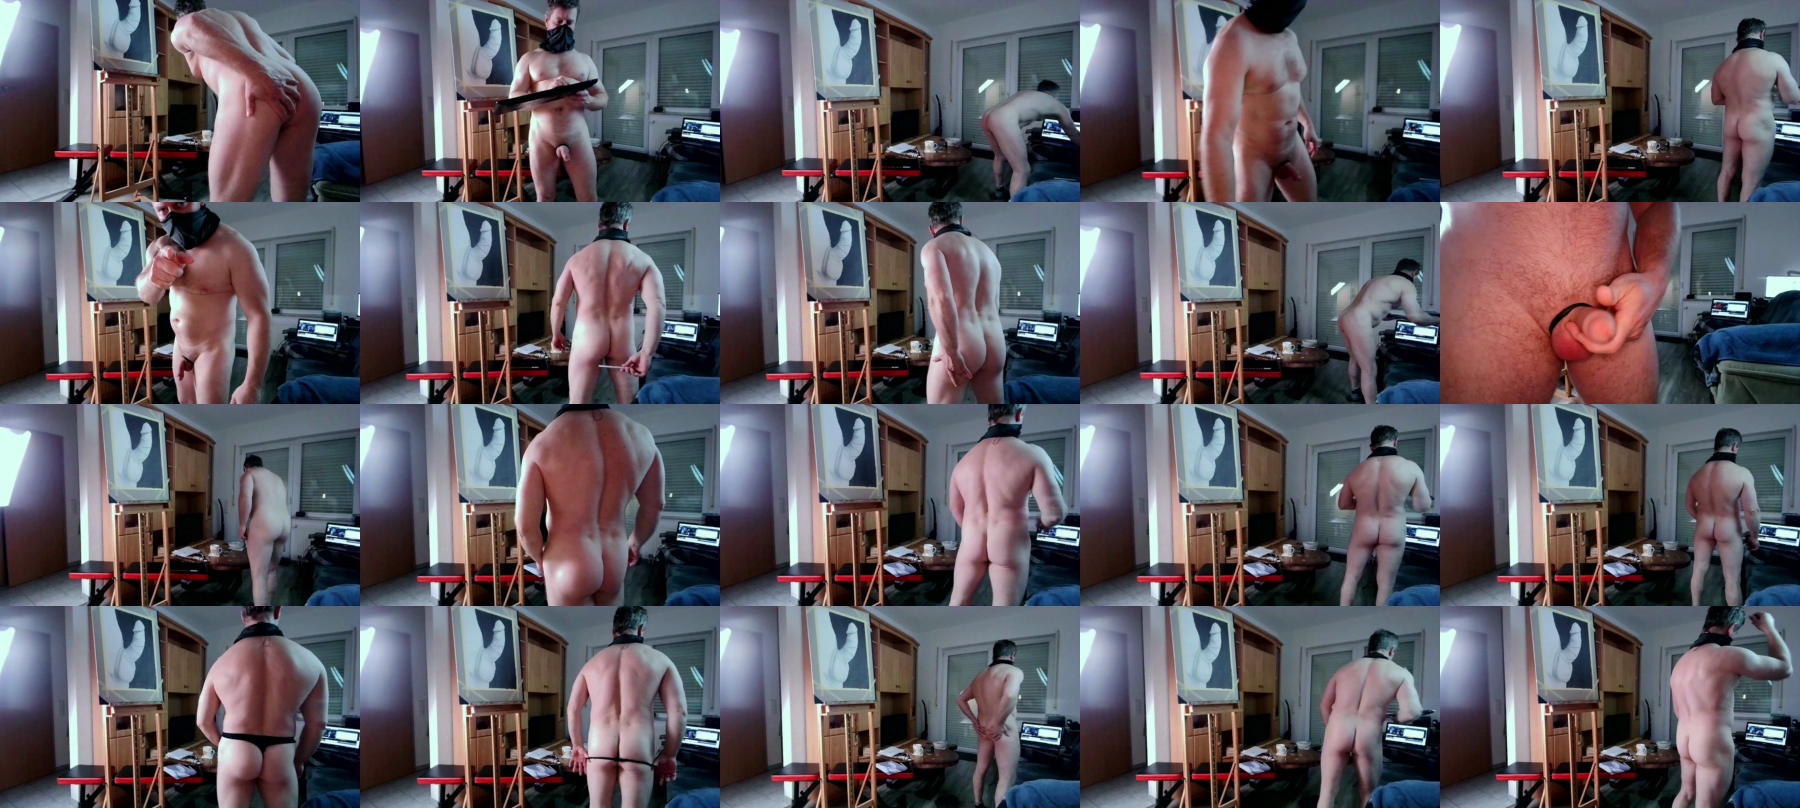 Garth_NakedArt  15-11-2021 Recorded Video Nude